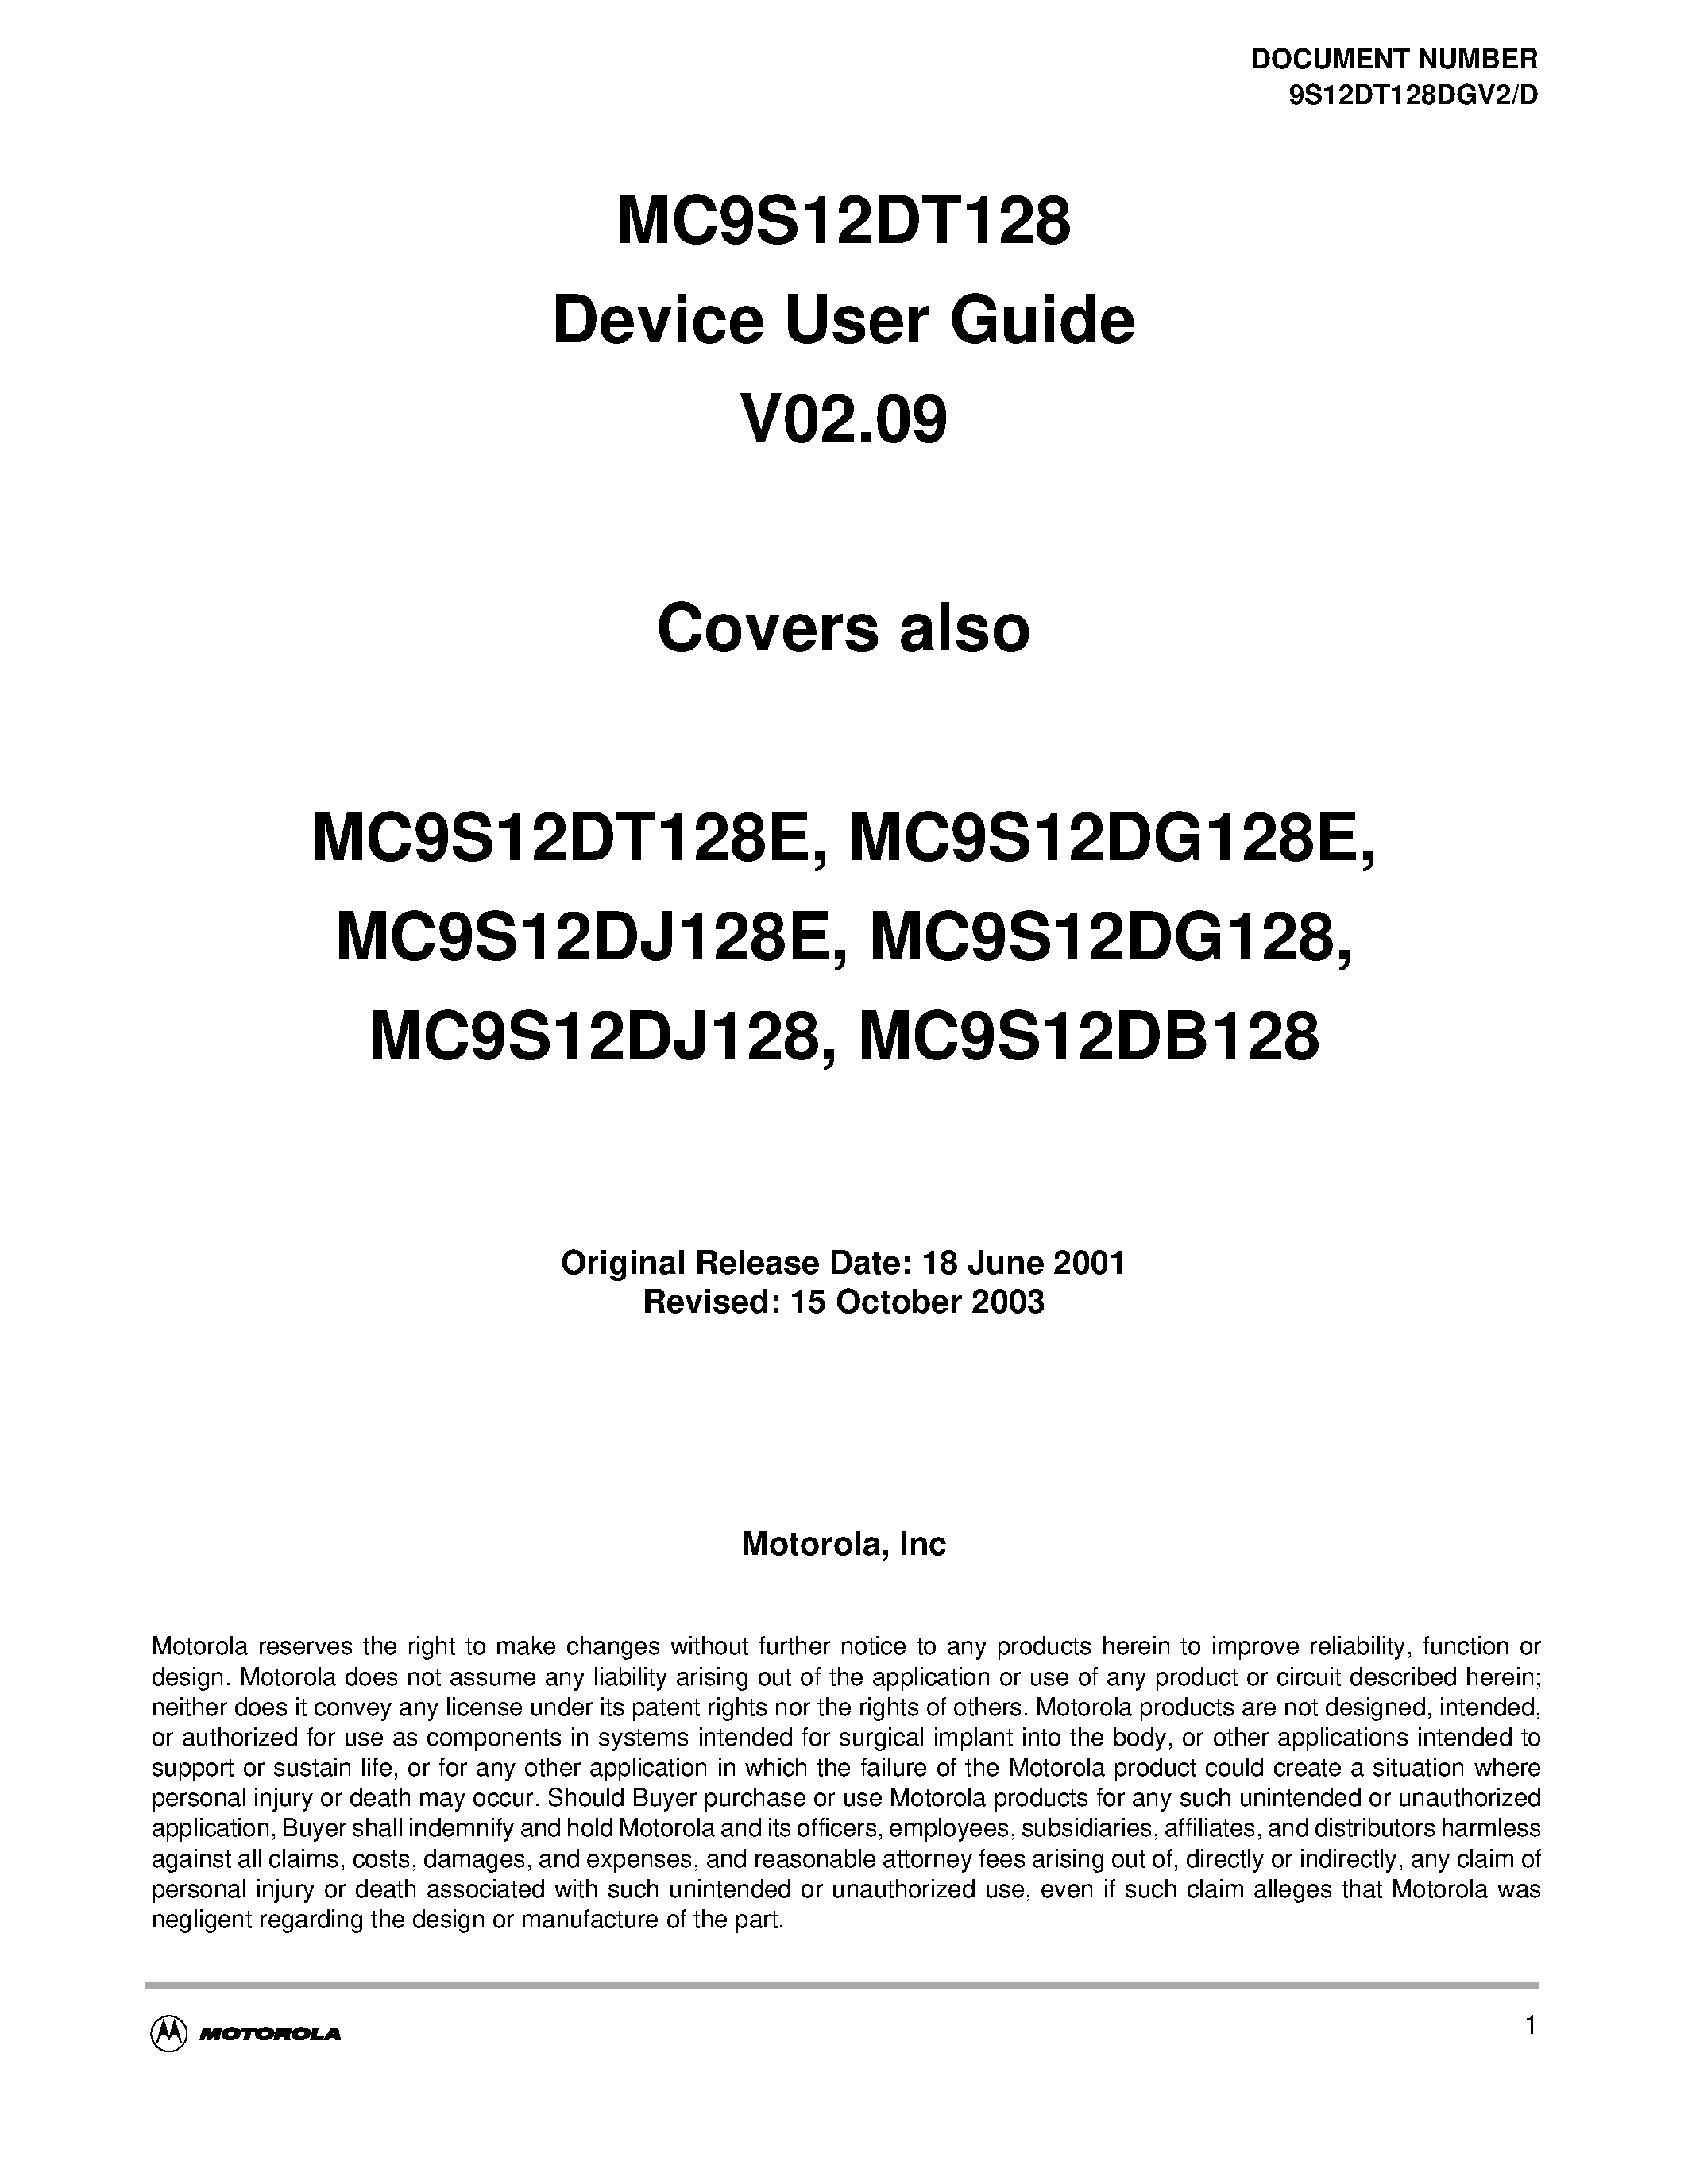 Даташит SC515848 - MC9S12DT128 Device User Guide V02.09 страница 1